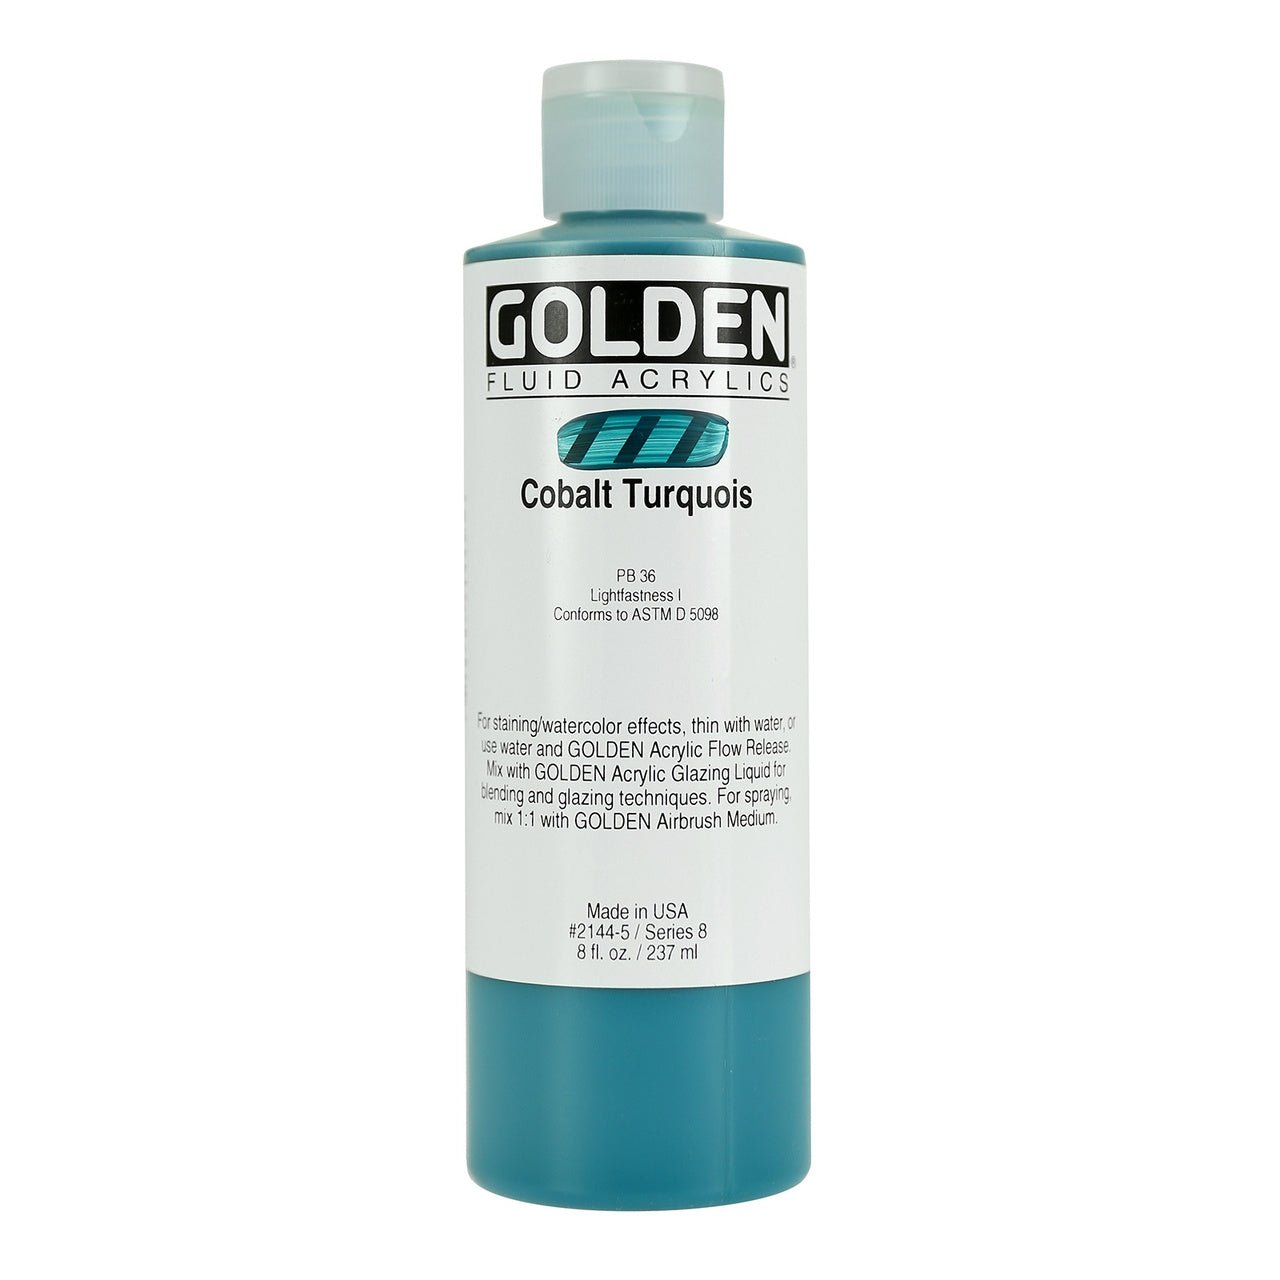 Golden Fluid Acrylic Cobalt Turquois 8 oz - merriartist.com